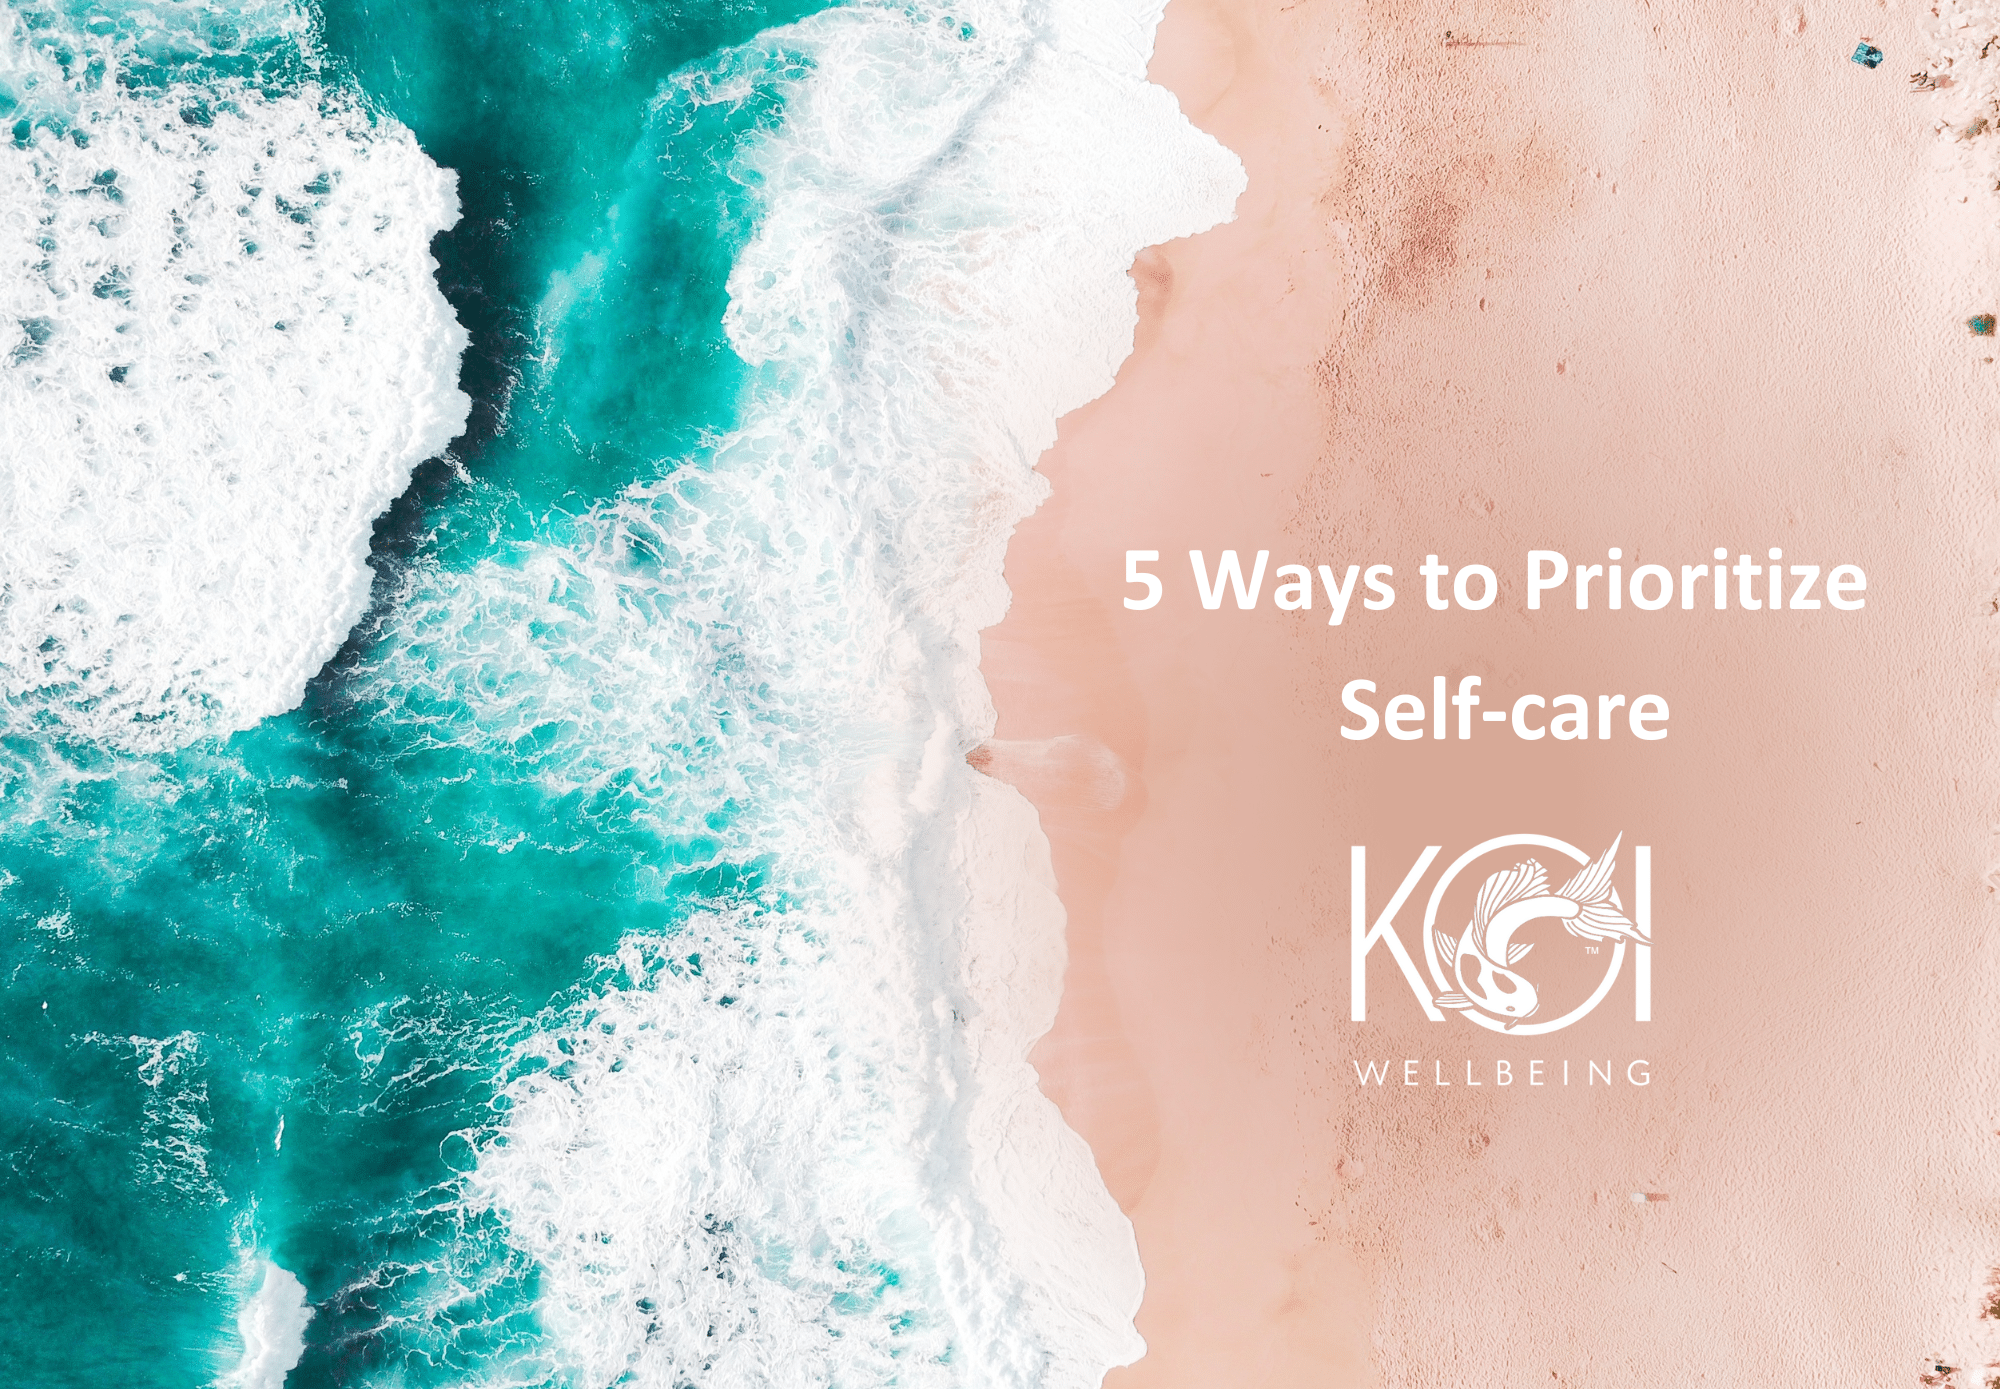 5 ways to prioritize self-care.